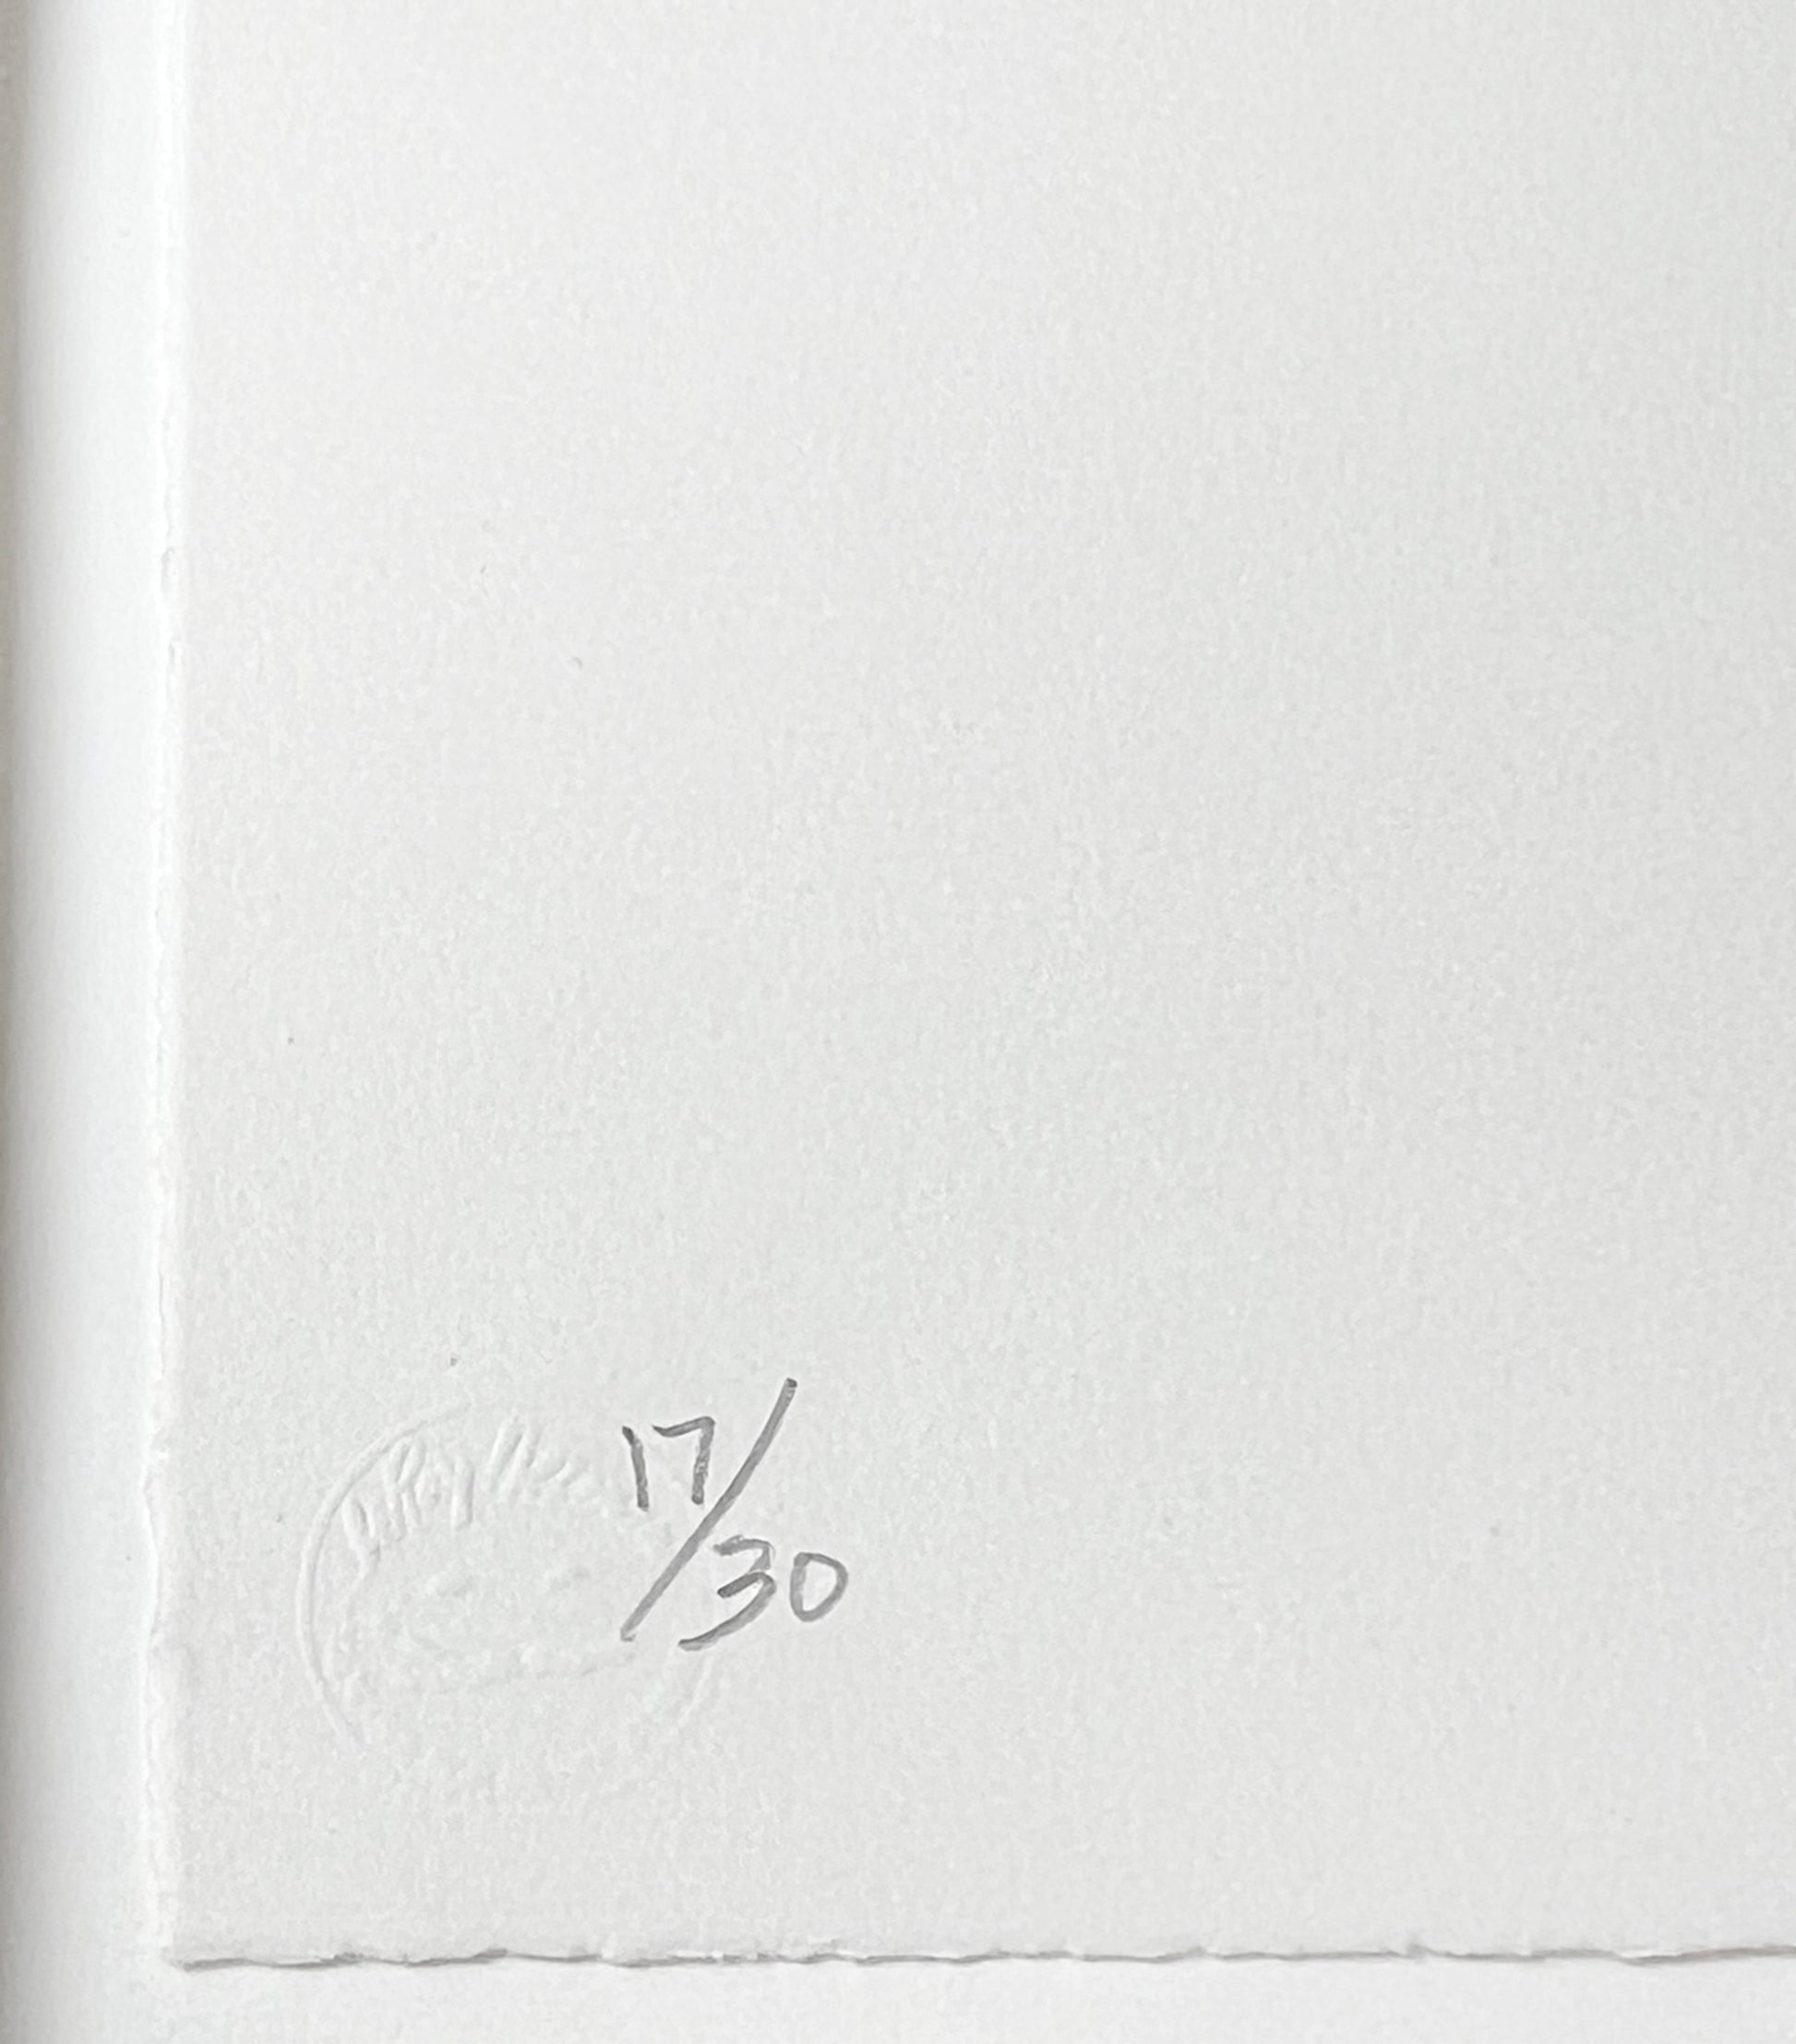 Edition Number in pencil & Publisher Blindstamp lower left Jasper Johns Untitled, 2012 Color Intaglio Print detail of edition number and publishers stamp